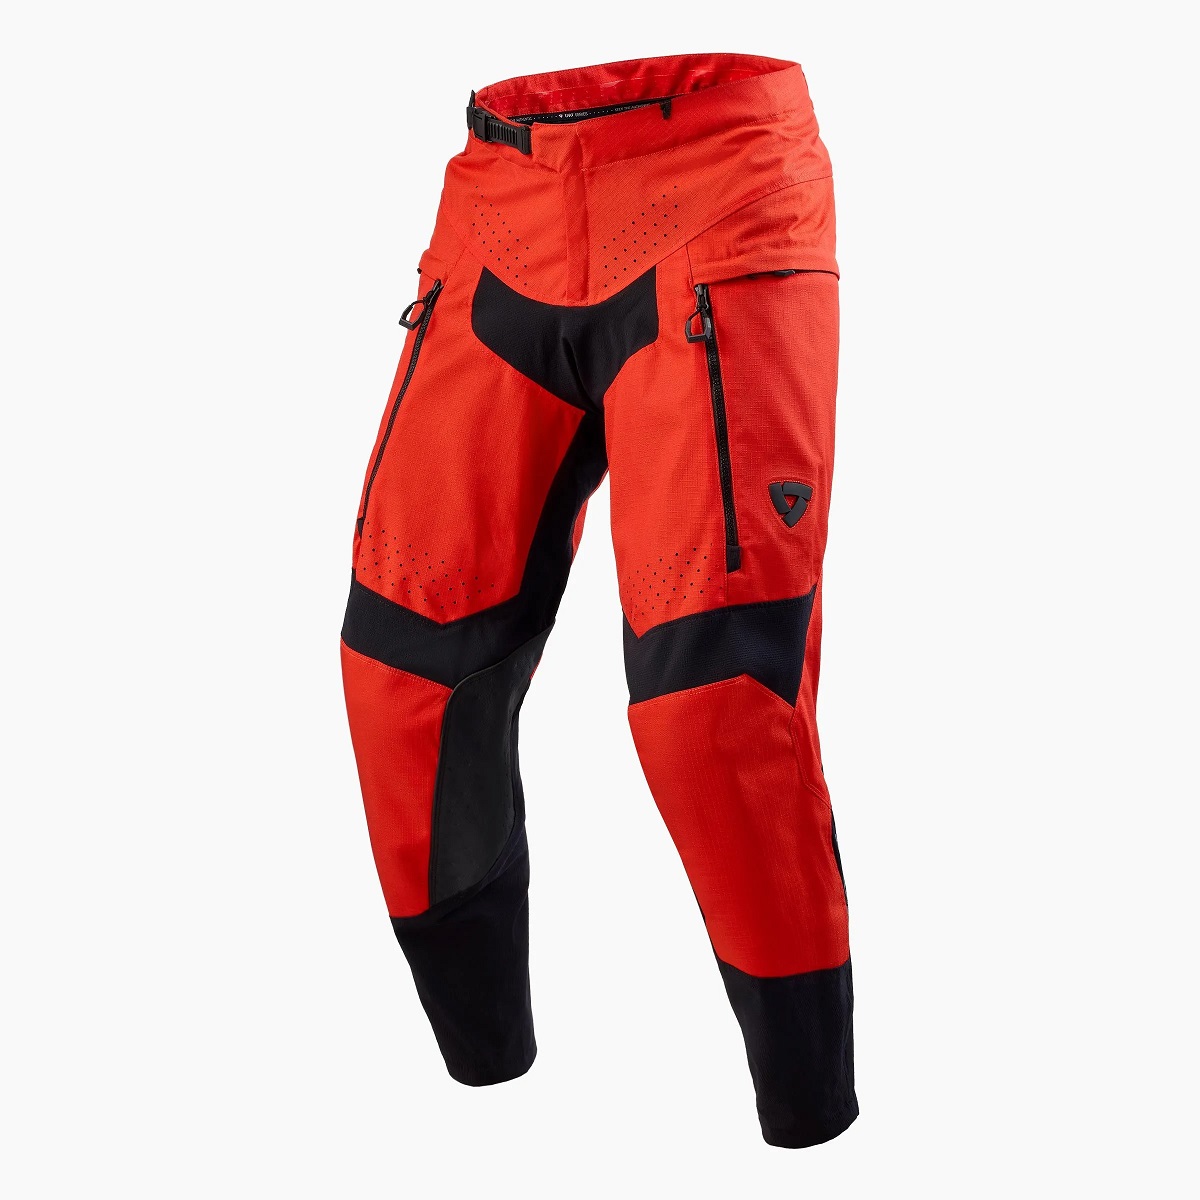 Image of REV'IT! Peninsula Trousers Red Motorcycle Pants Size M EN